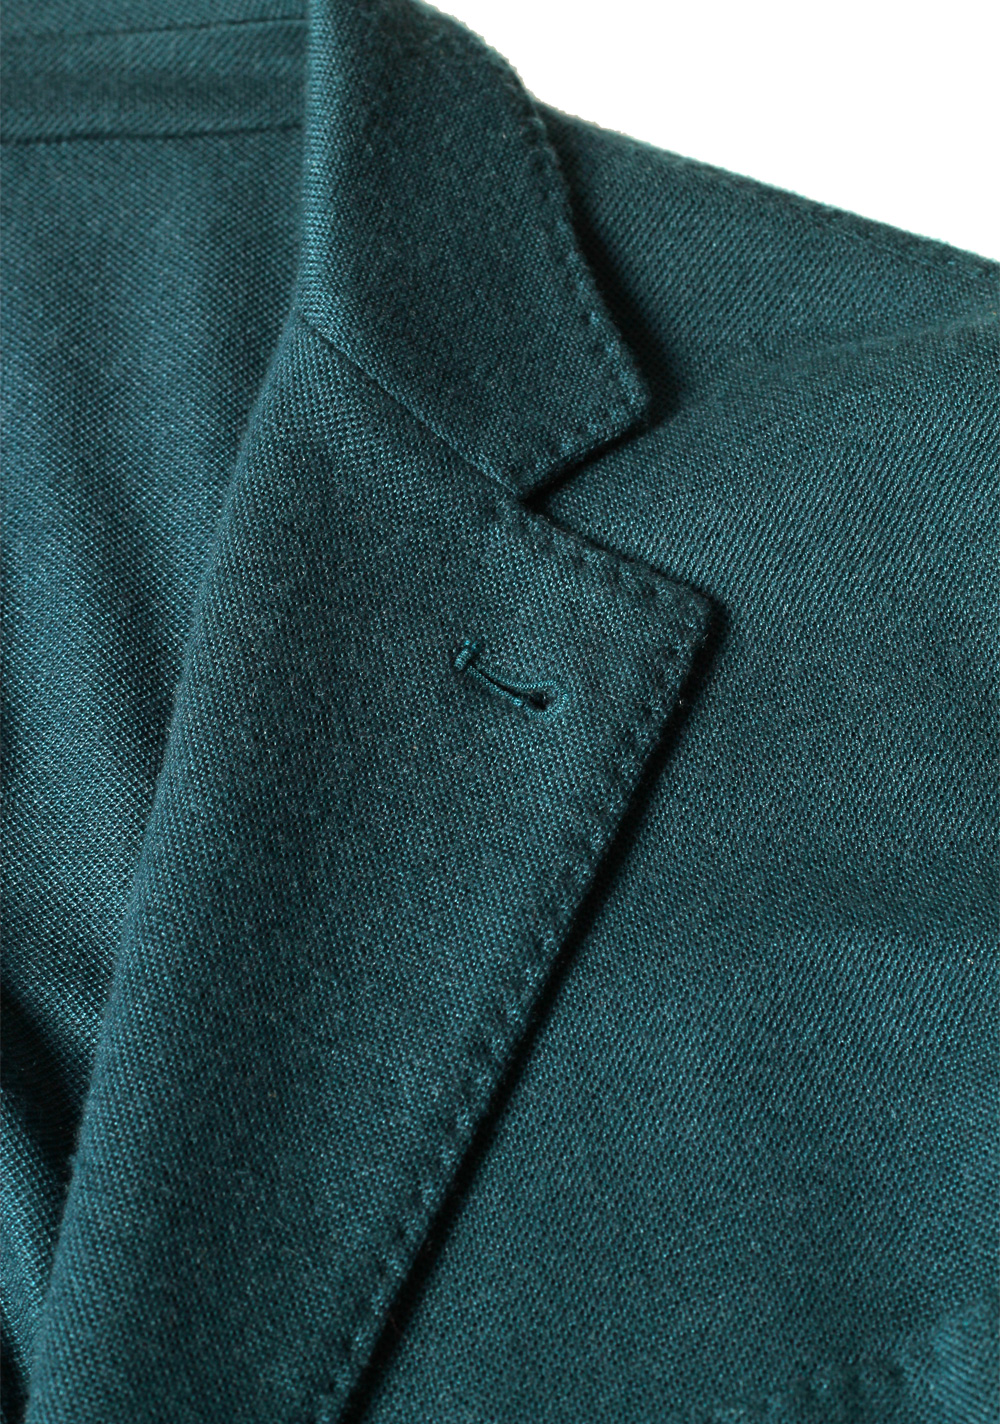 Loro Piana Teal Sweater Blazer Size 56 / 46R U.S. | Costume Limité